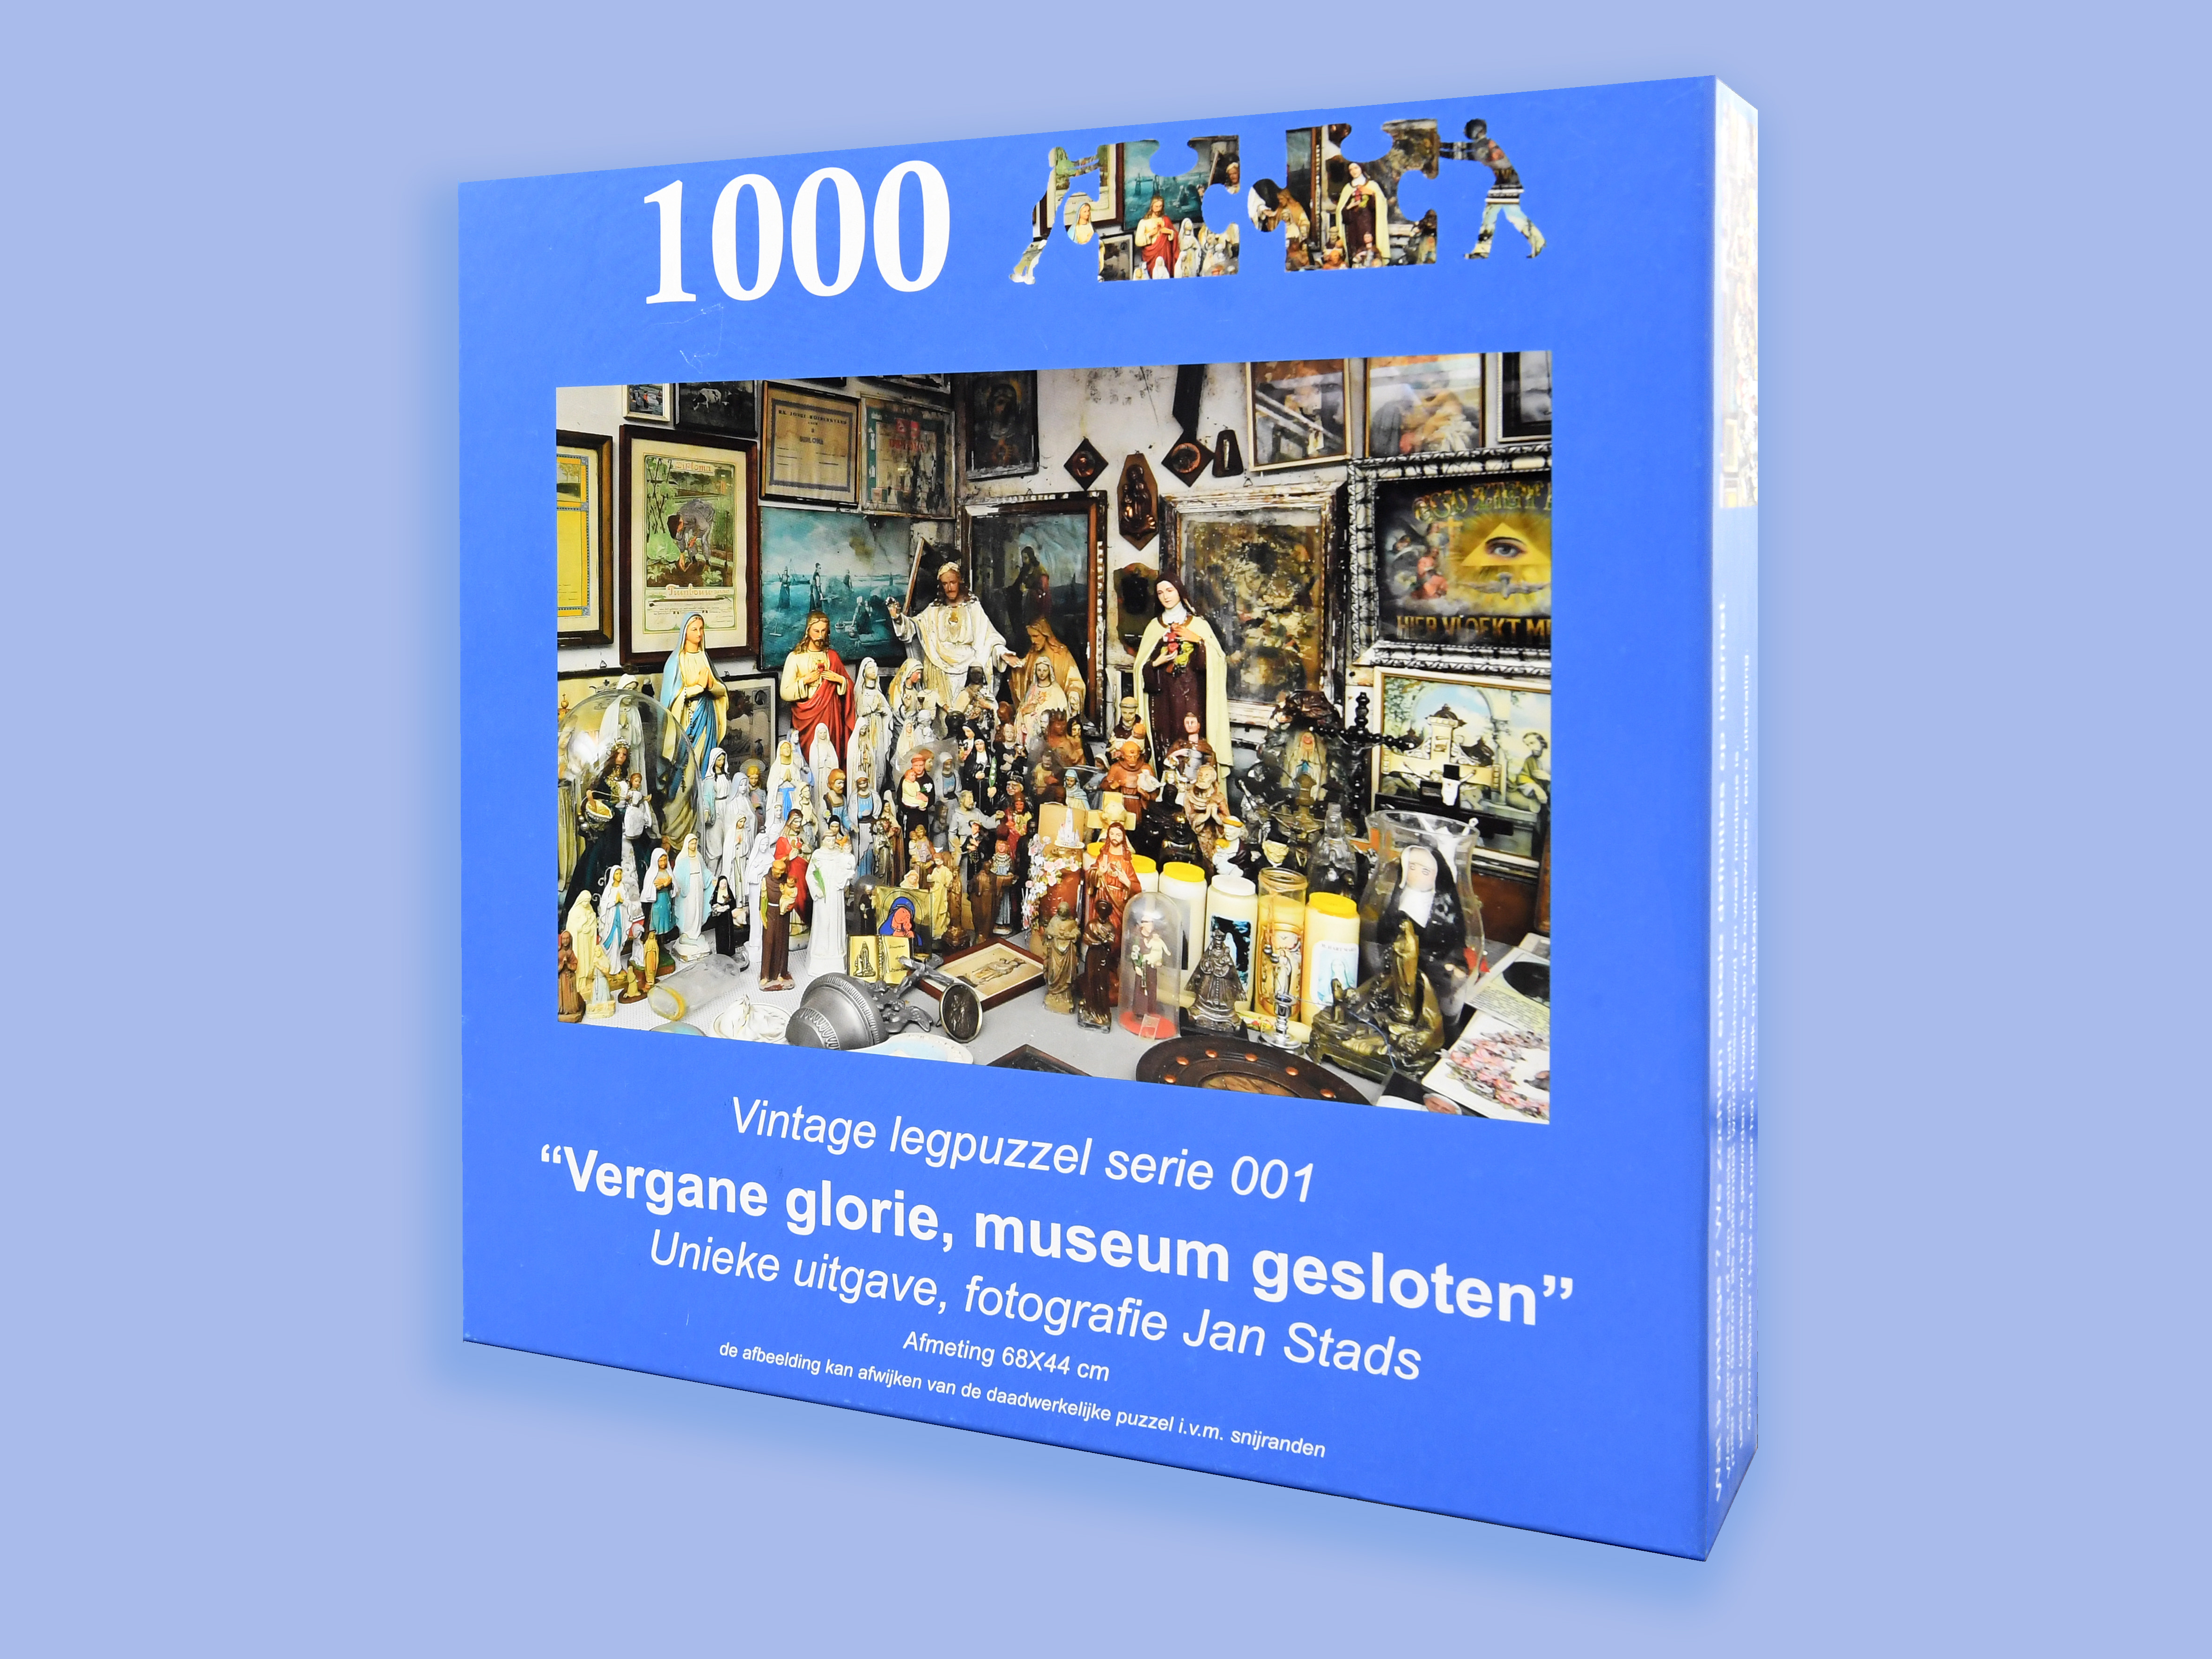 Vintage-serie 001 Legpuzzel Vergane glorie museum gesloten 1000 stukjes